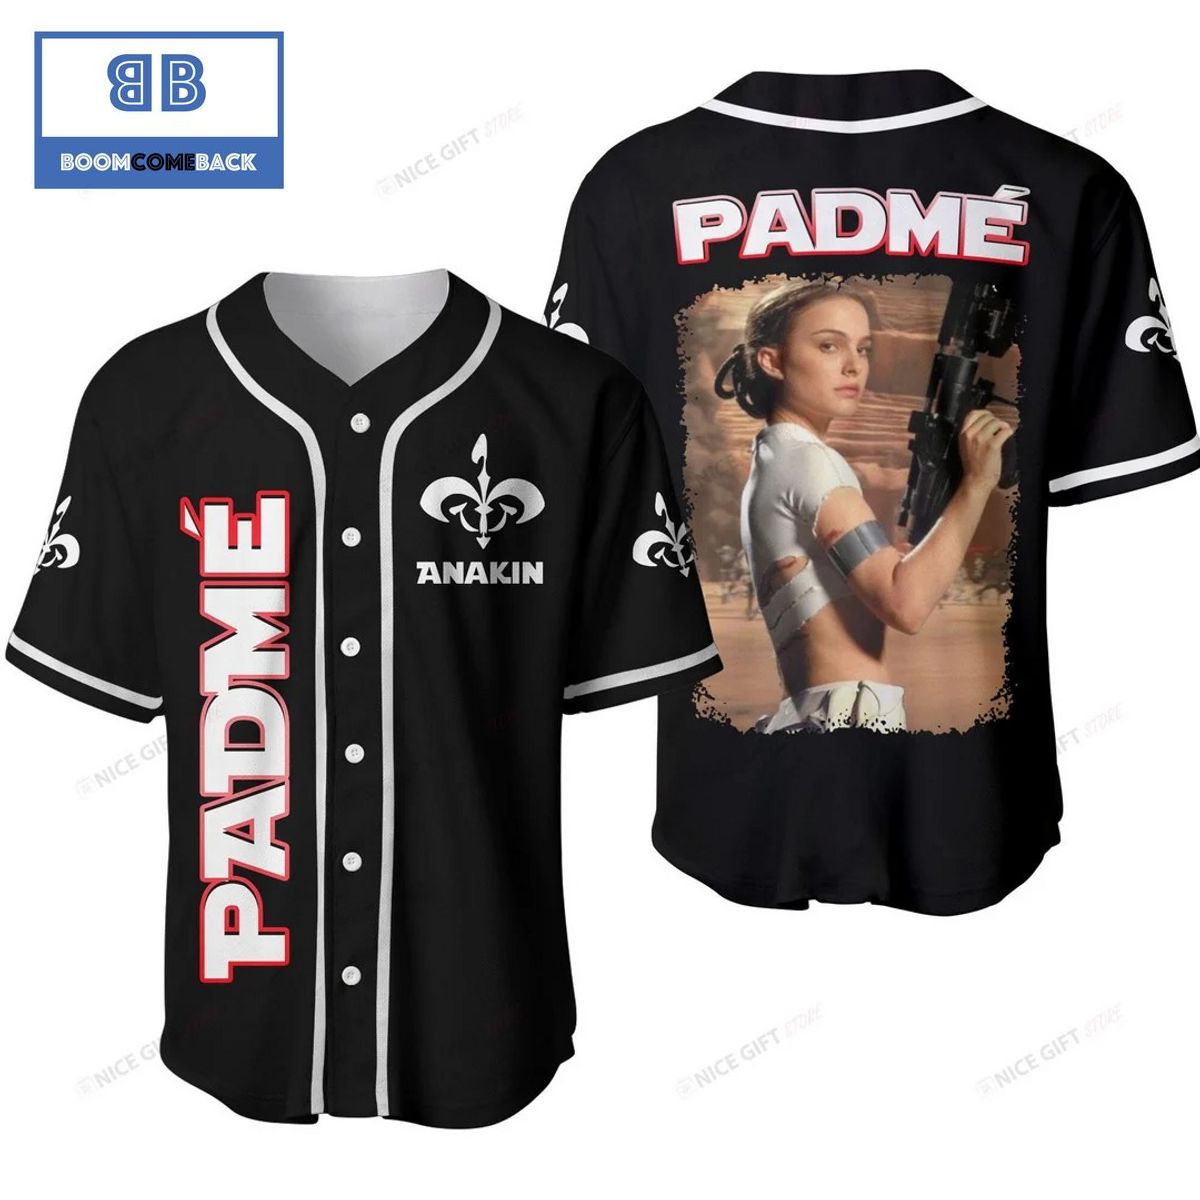 Star Wars Padme Baseball Jersey